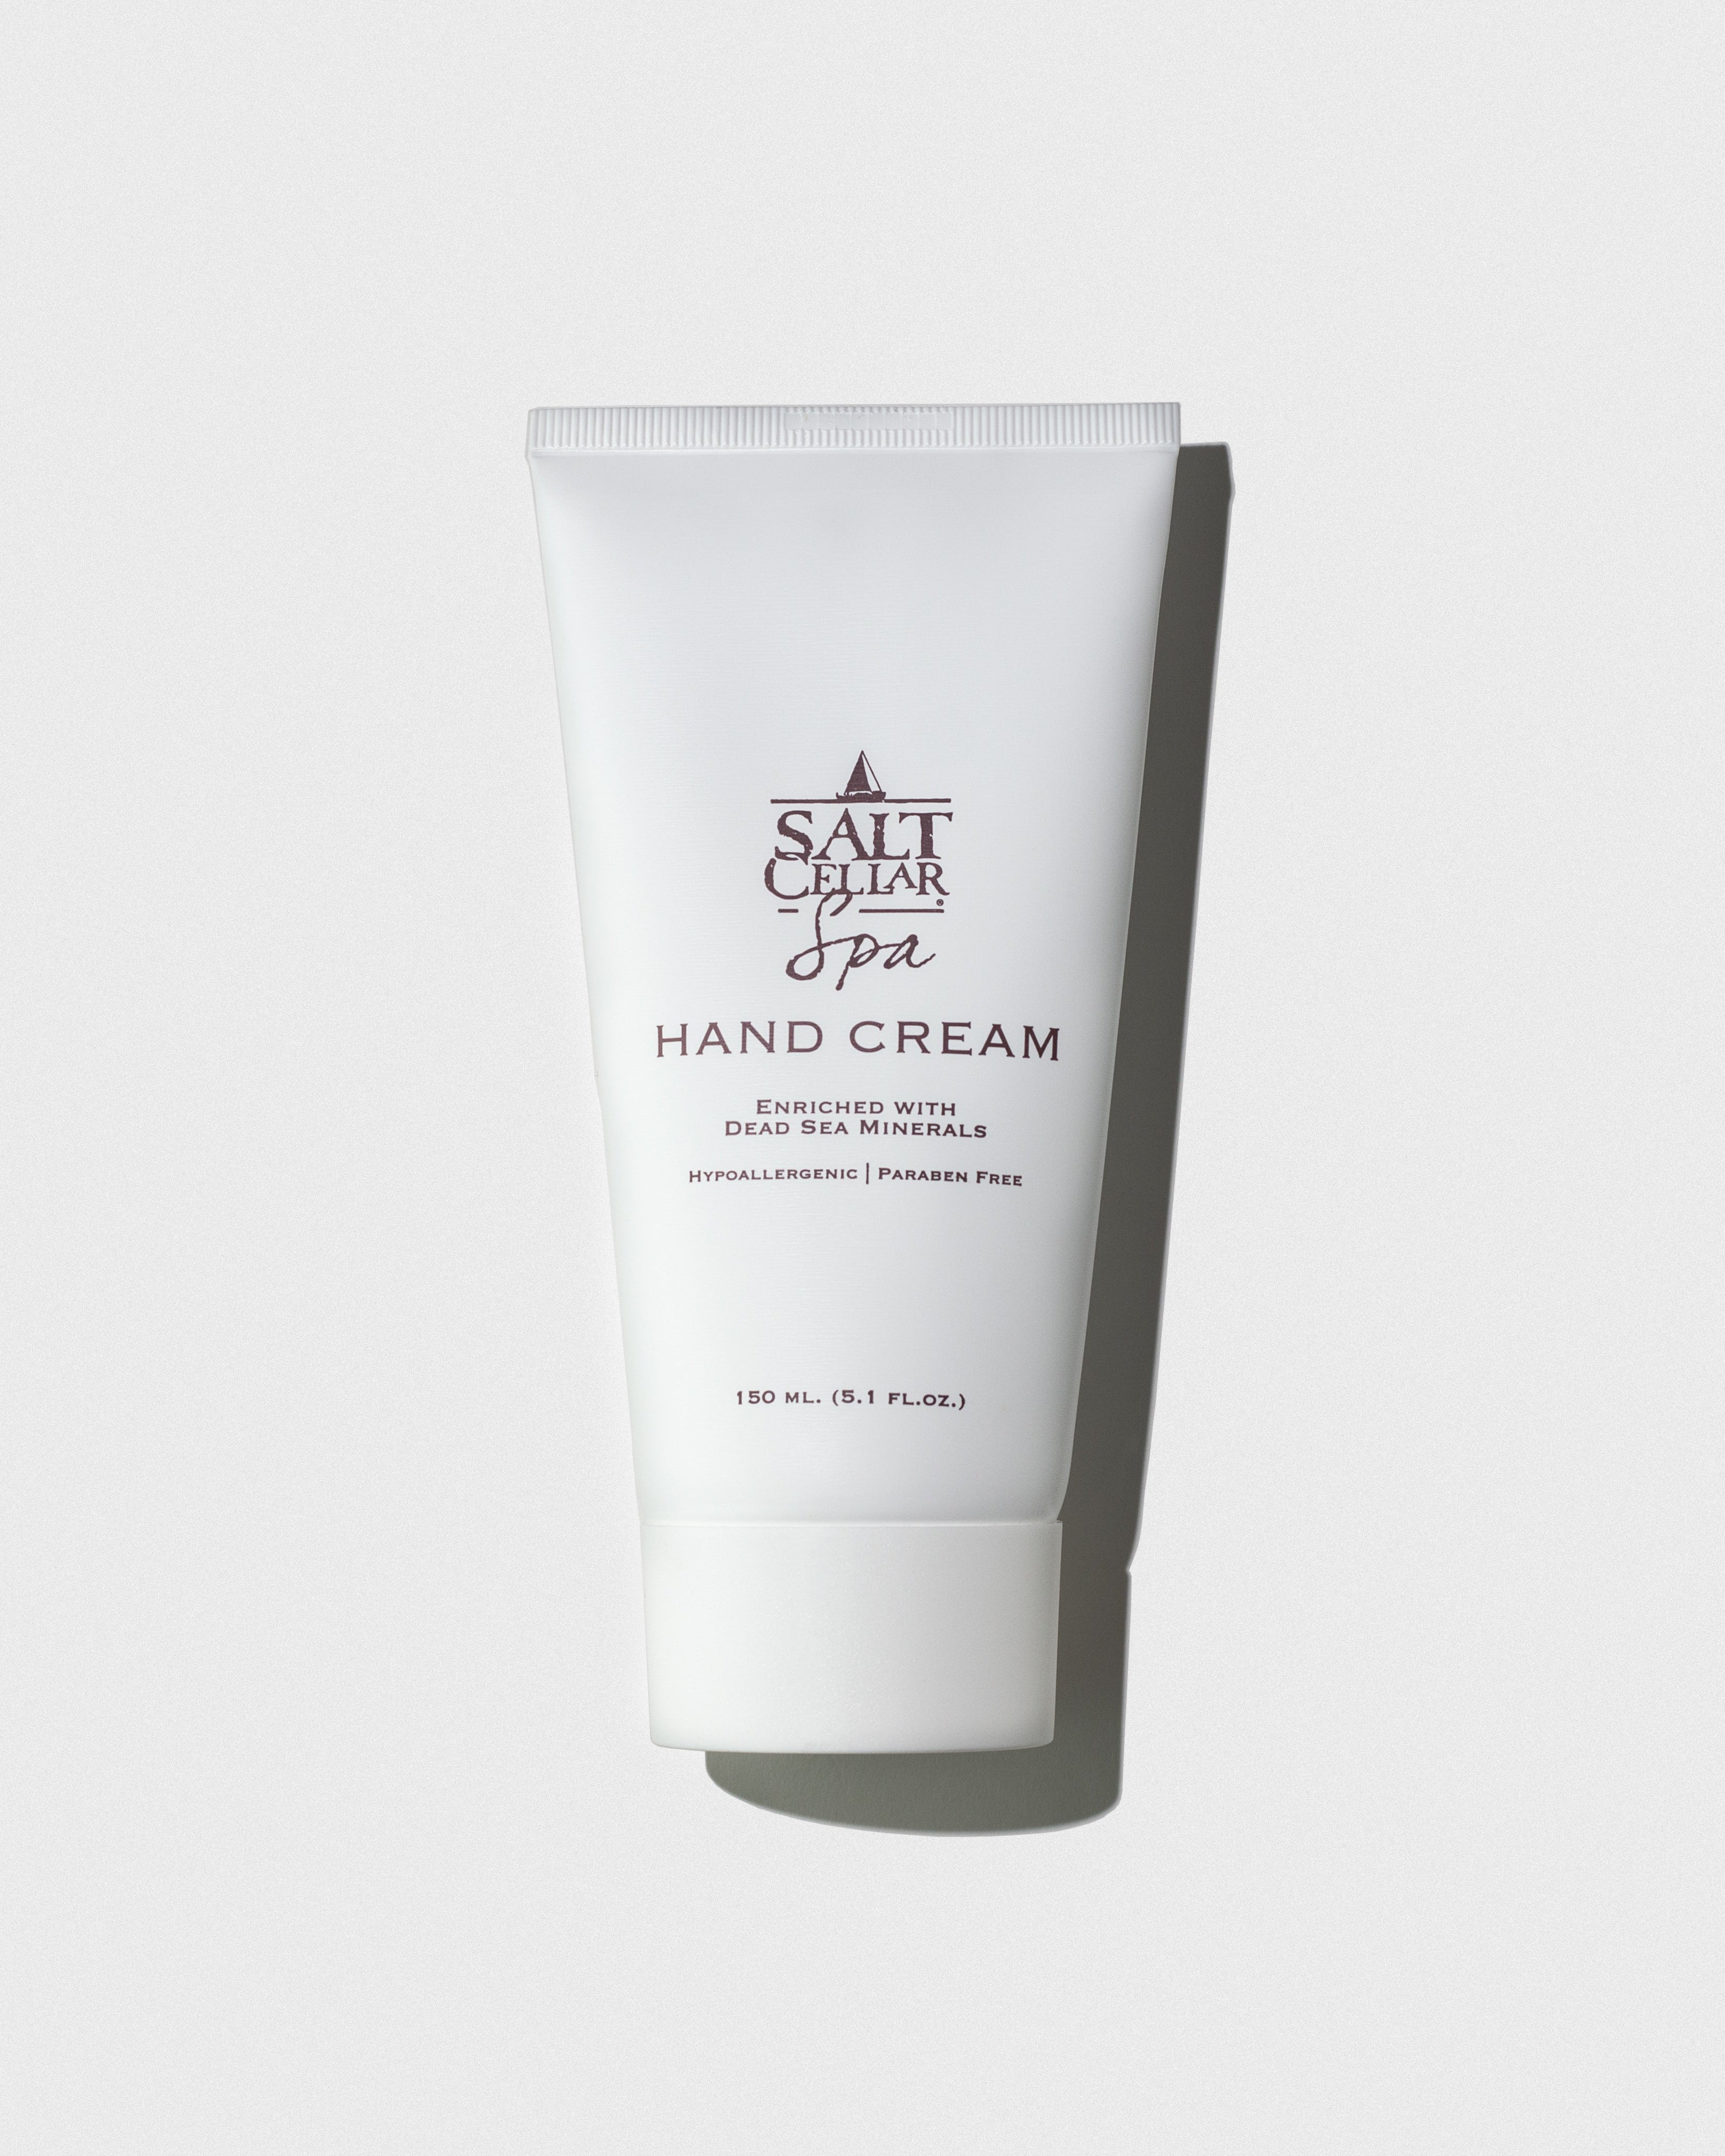 Dead Sea Hand Cream The Salt Cellar